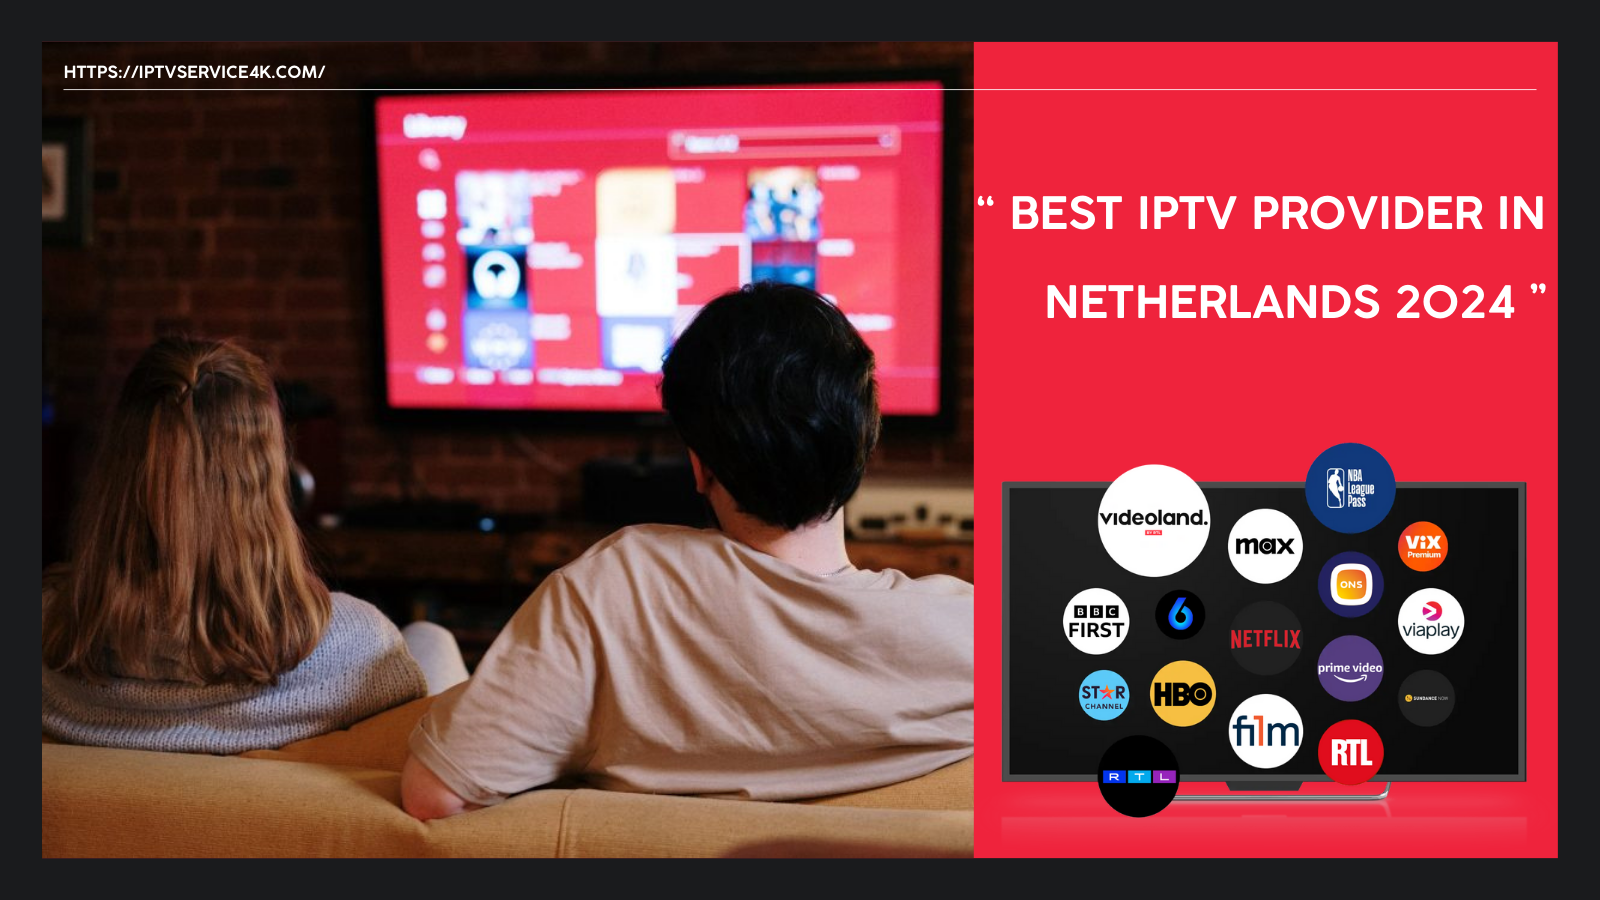 Best IPTV Provider In Netherlands 2024